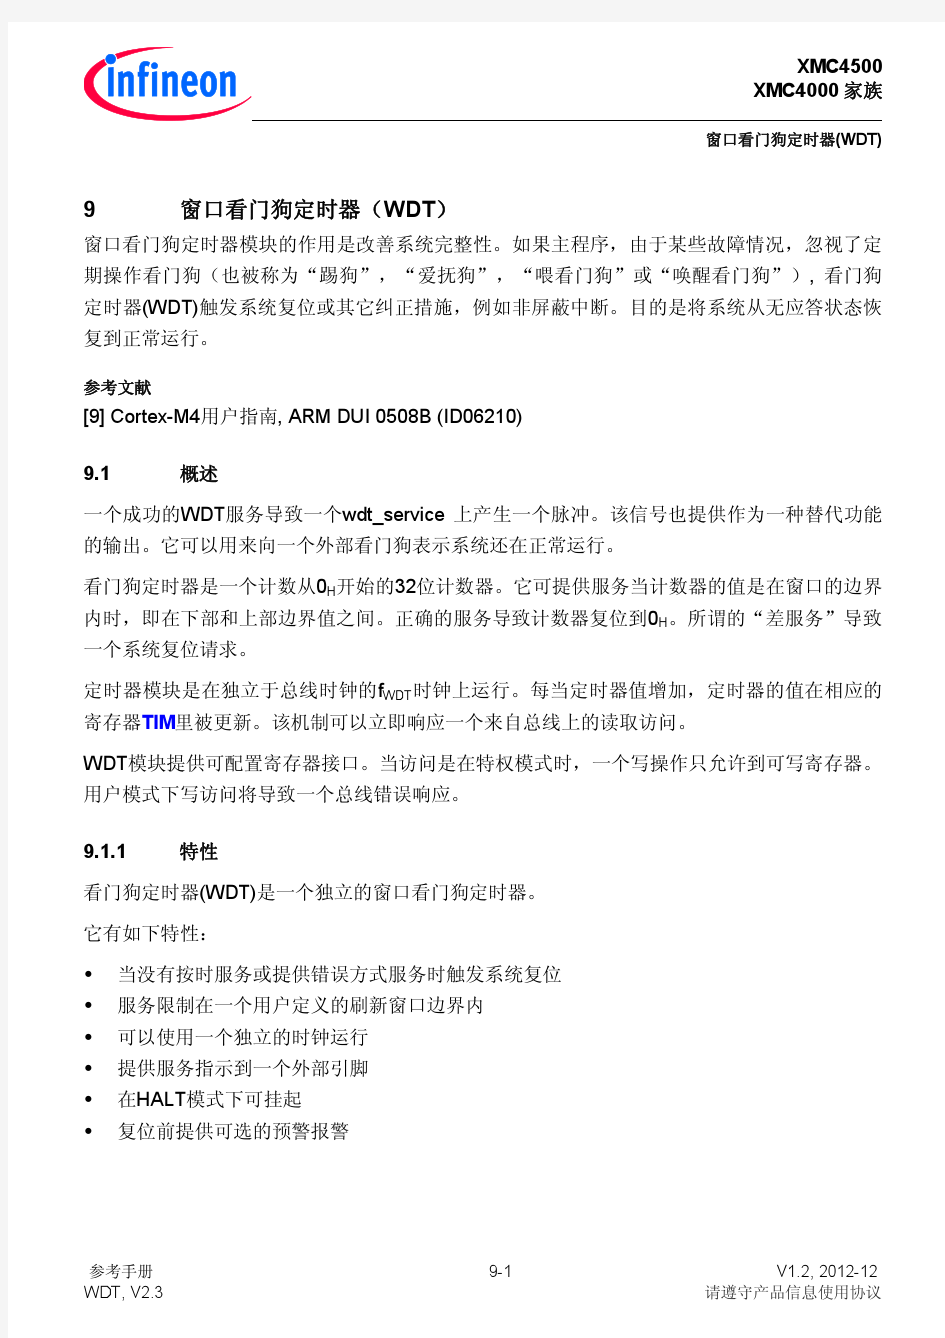 XMC4000中文参考手册-第09章 窗口看门狗定时器(WDT)